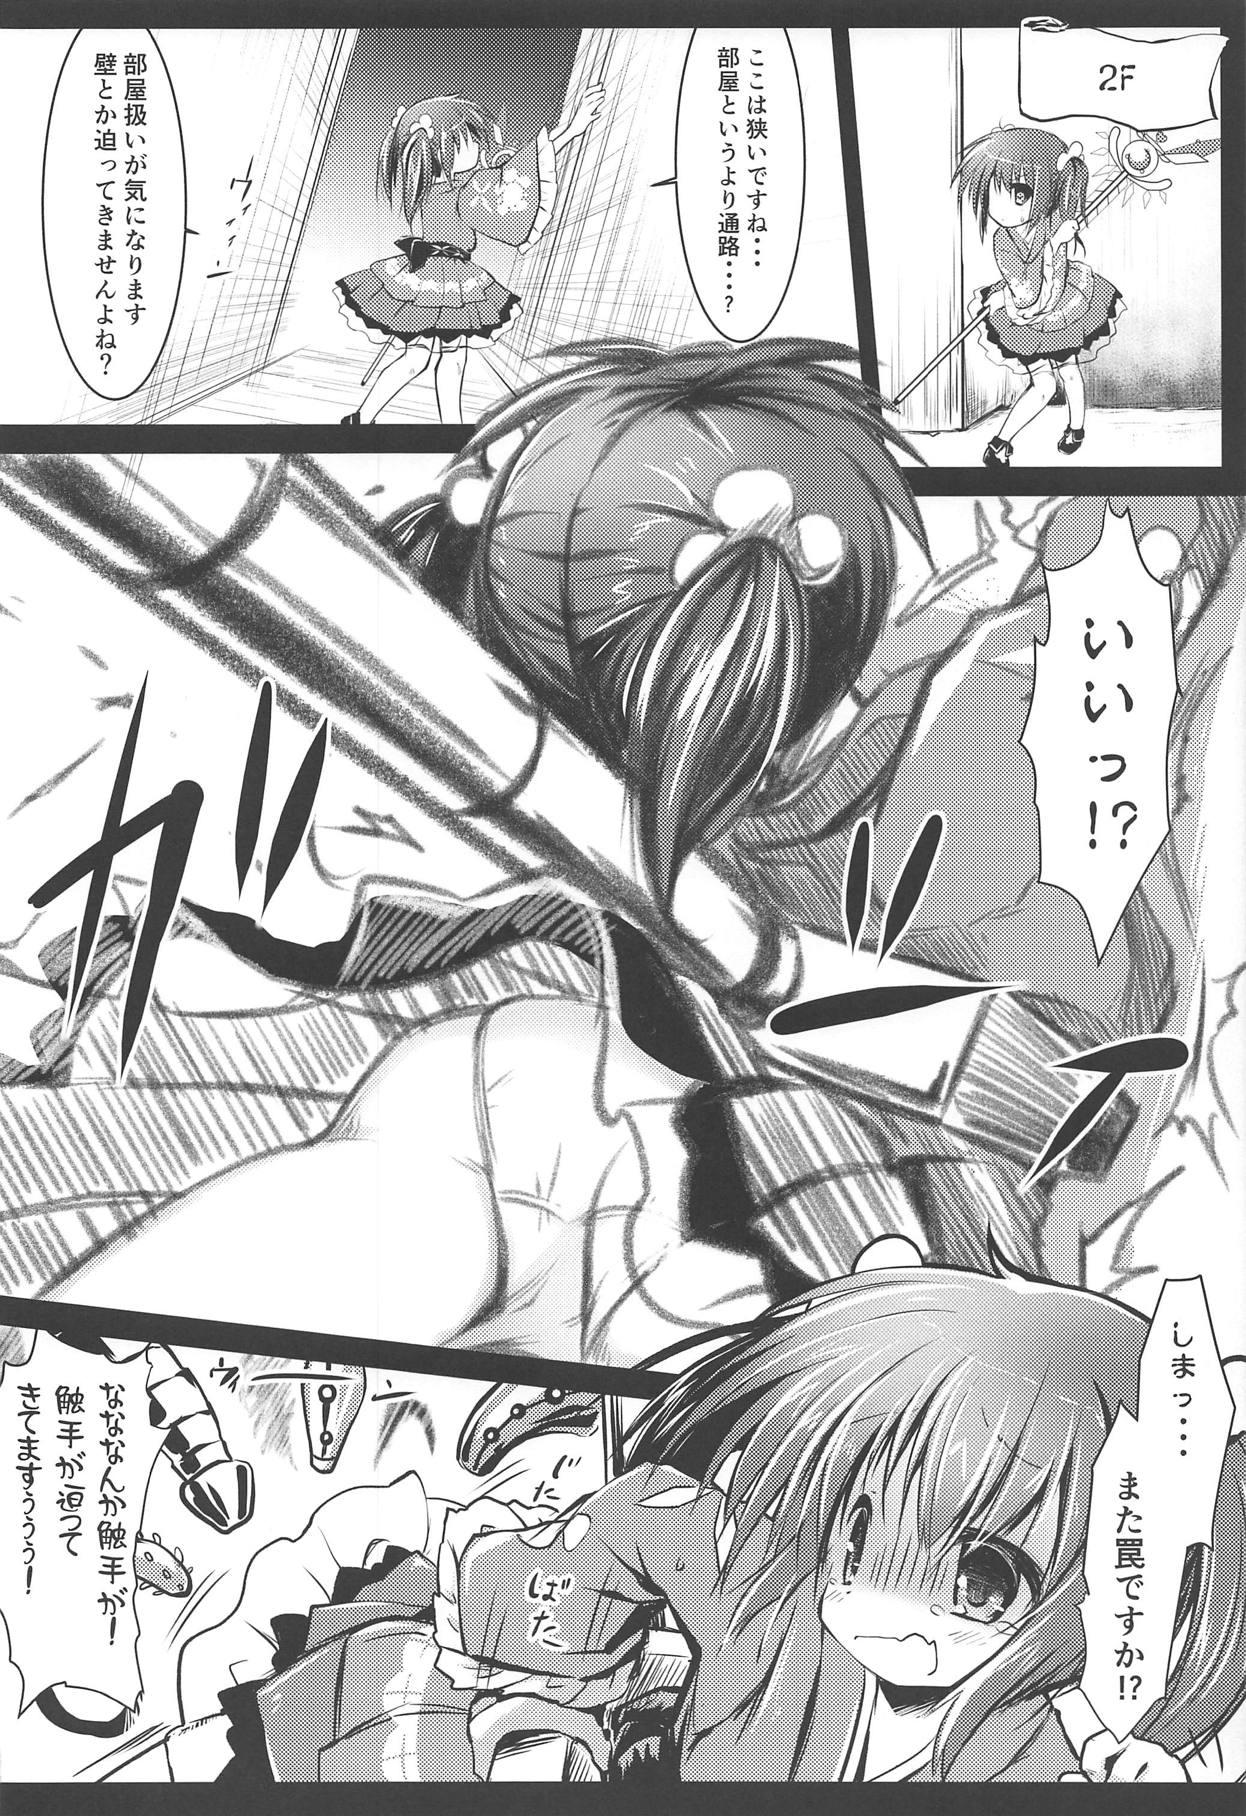 Mas Nishikigi VS Ero Trap D - Flower knight girl Vip - Page 7